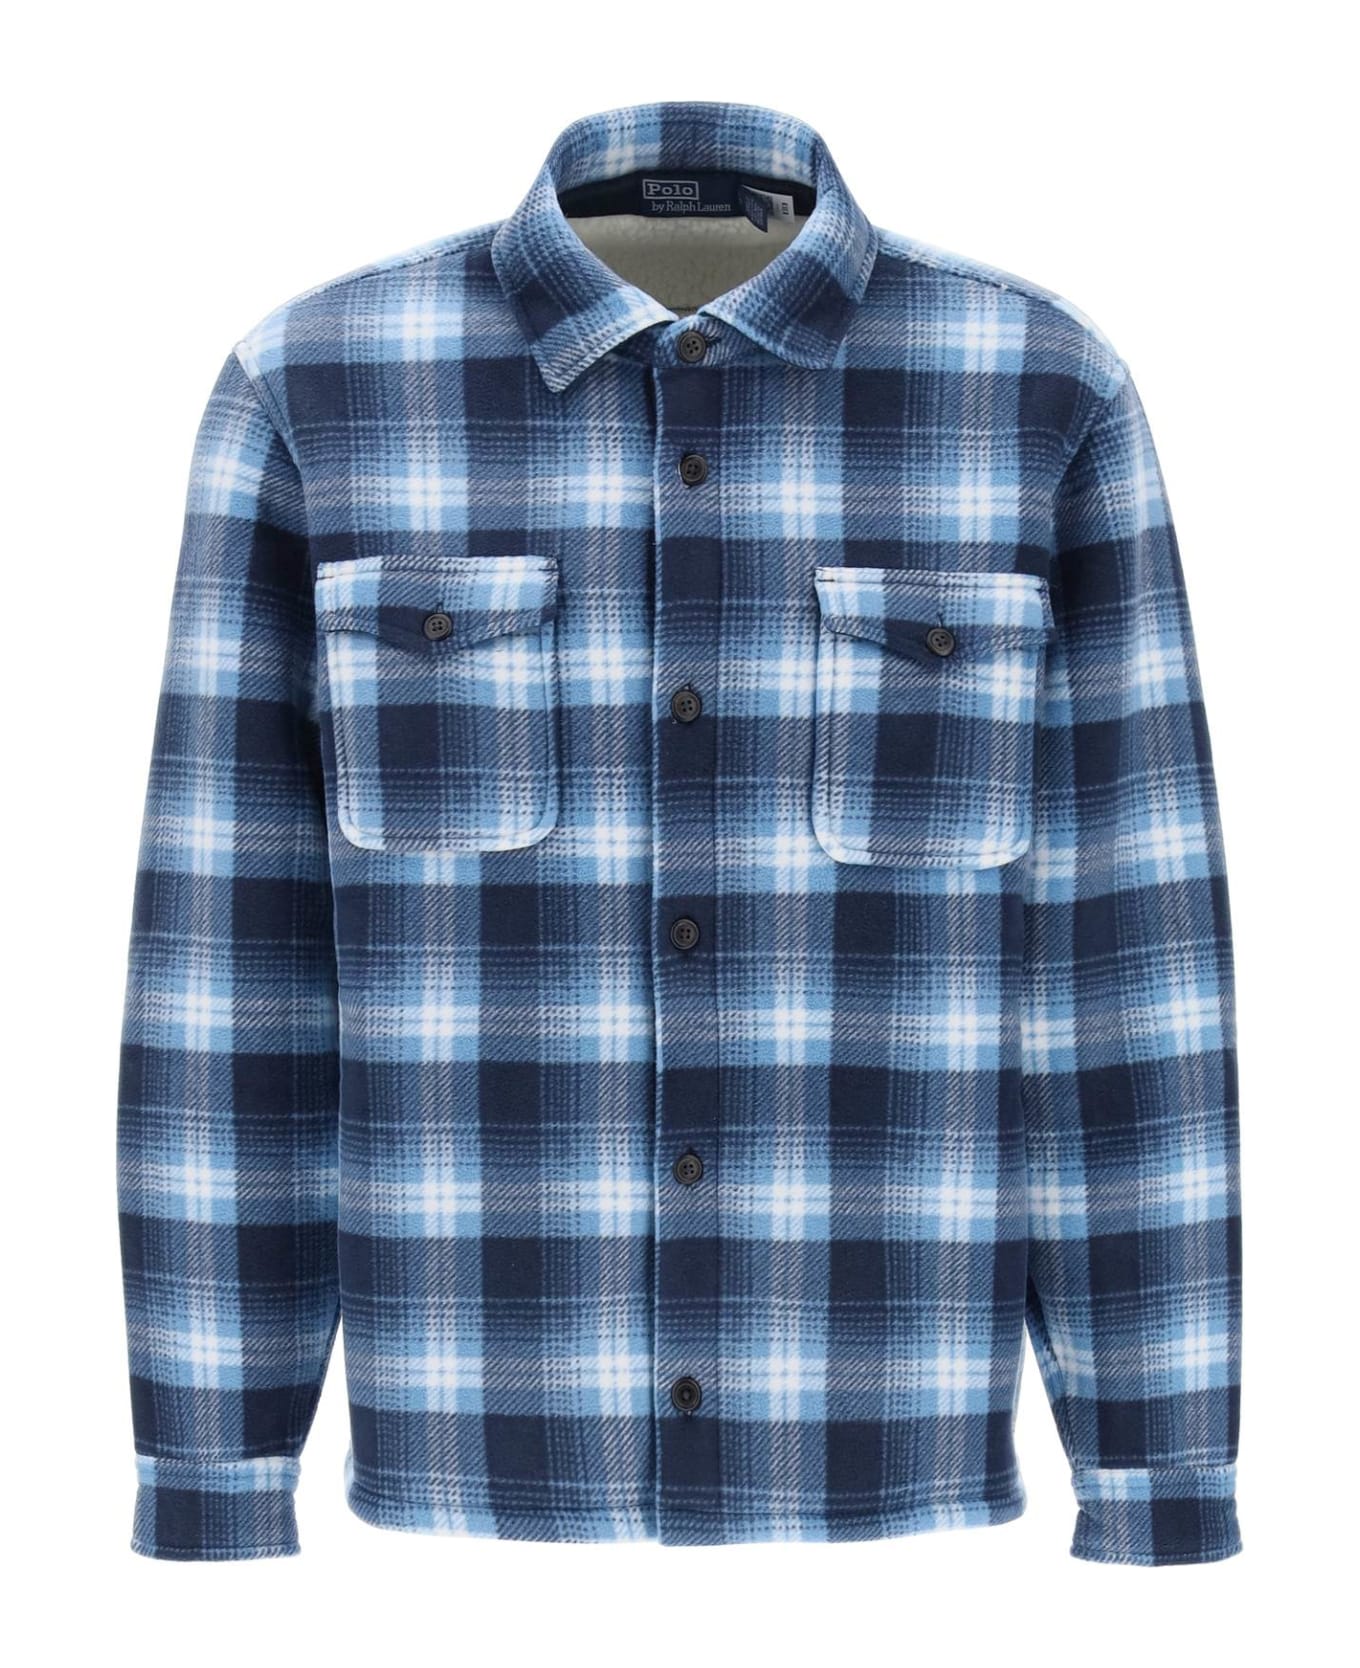 Polo Ralph Lauren Check Shirt Jacket - OUTDOOR OMBRE PLAID (Blue) ブレザー